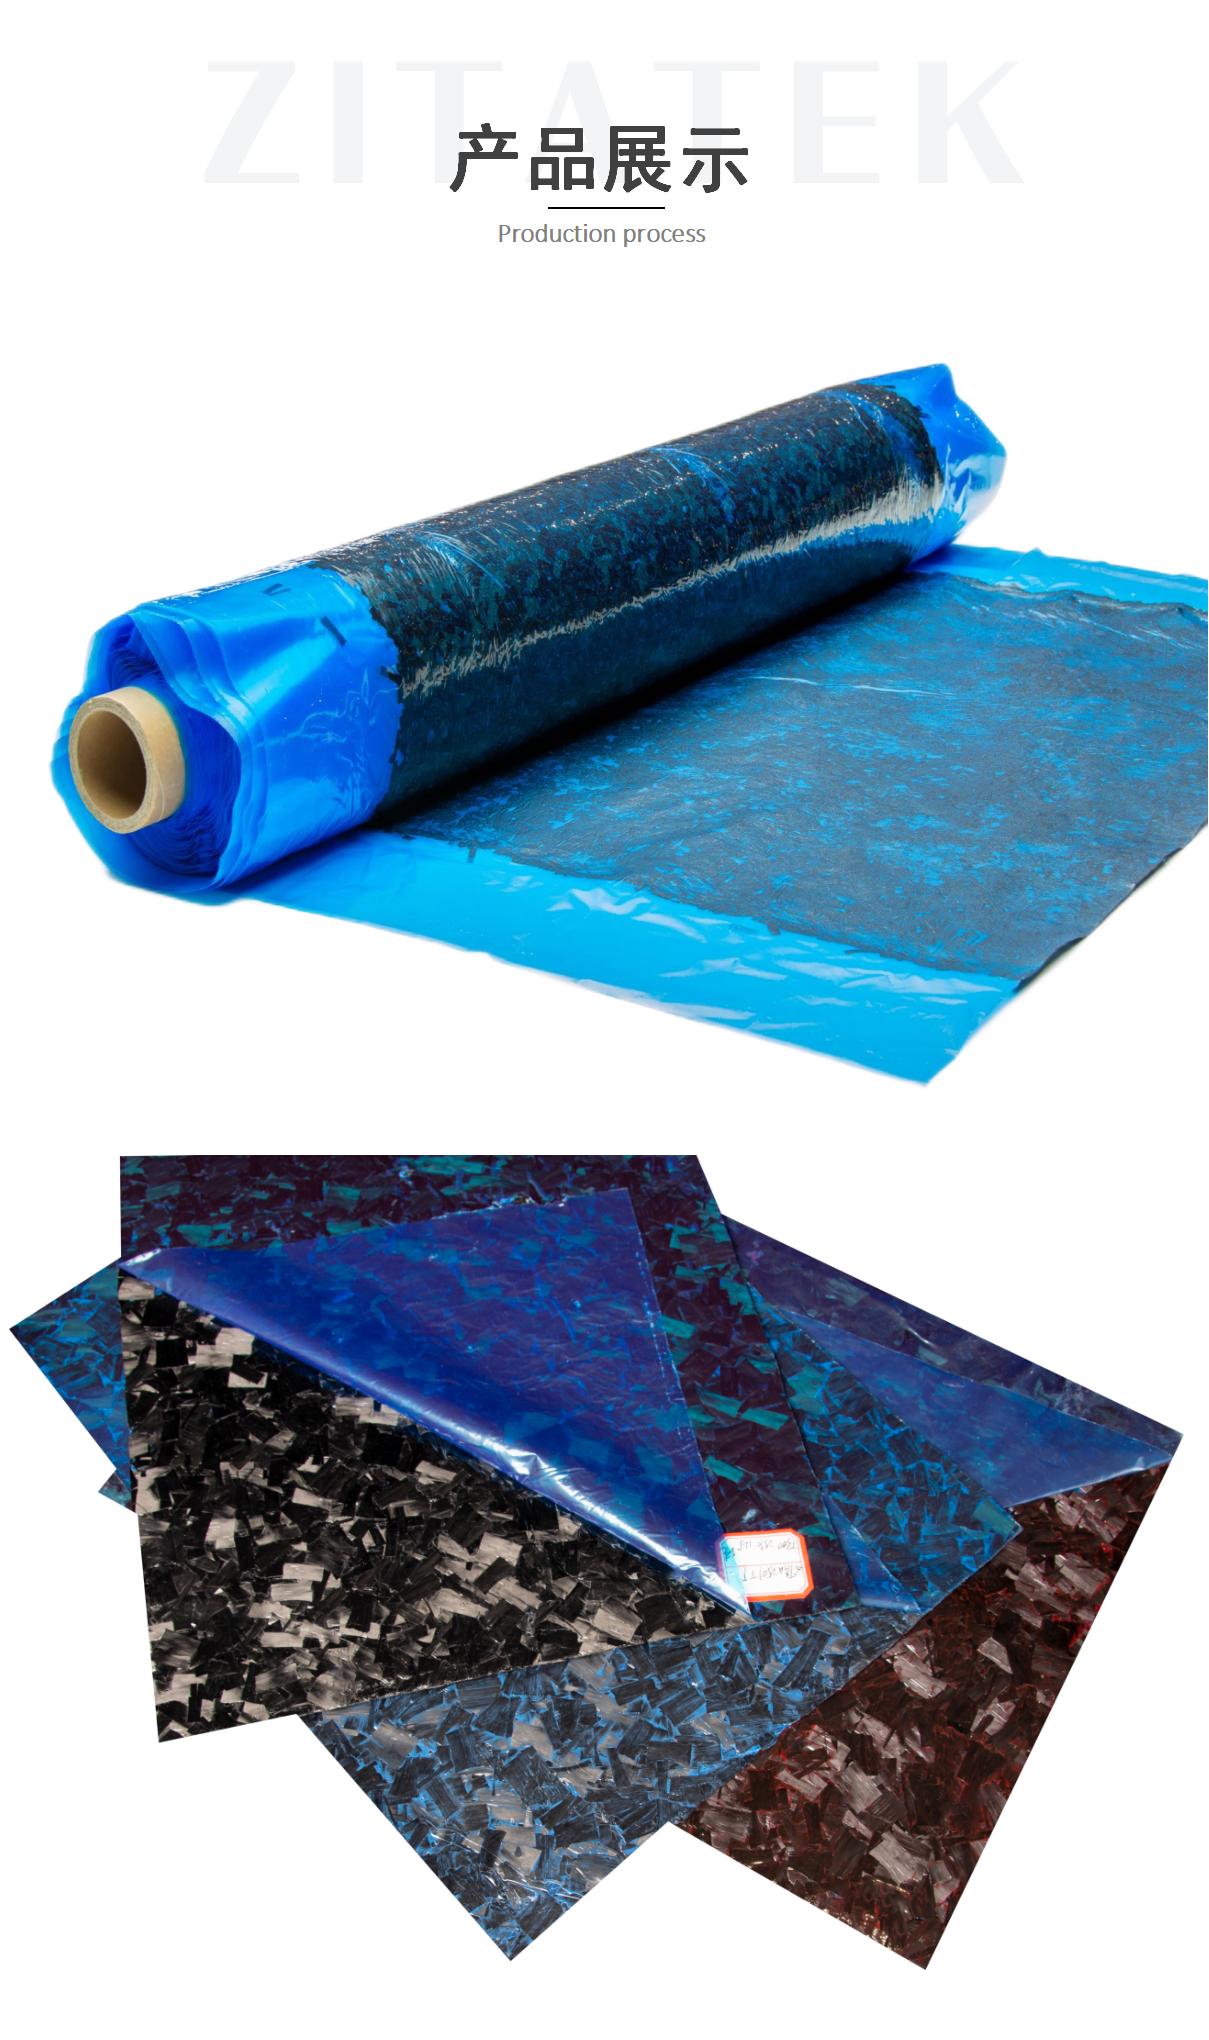 Manufacturer of forged textured carbon fiber SMC sheet, short cut carbon fiber prepreg molding material, automotive modification